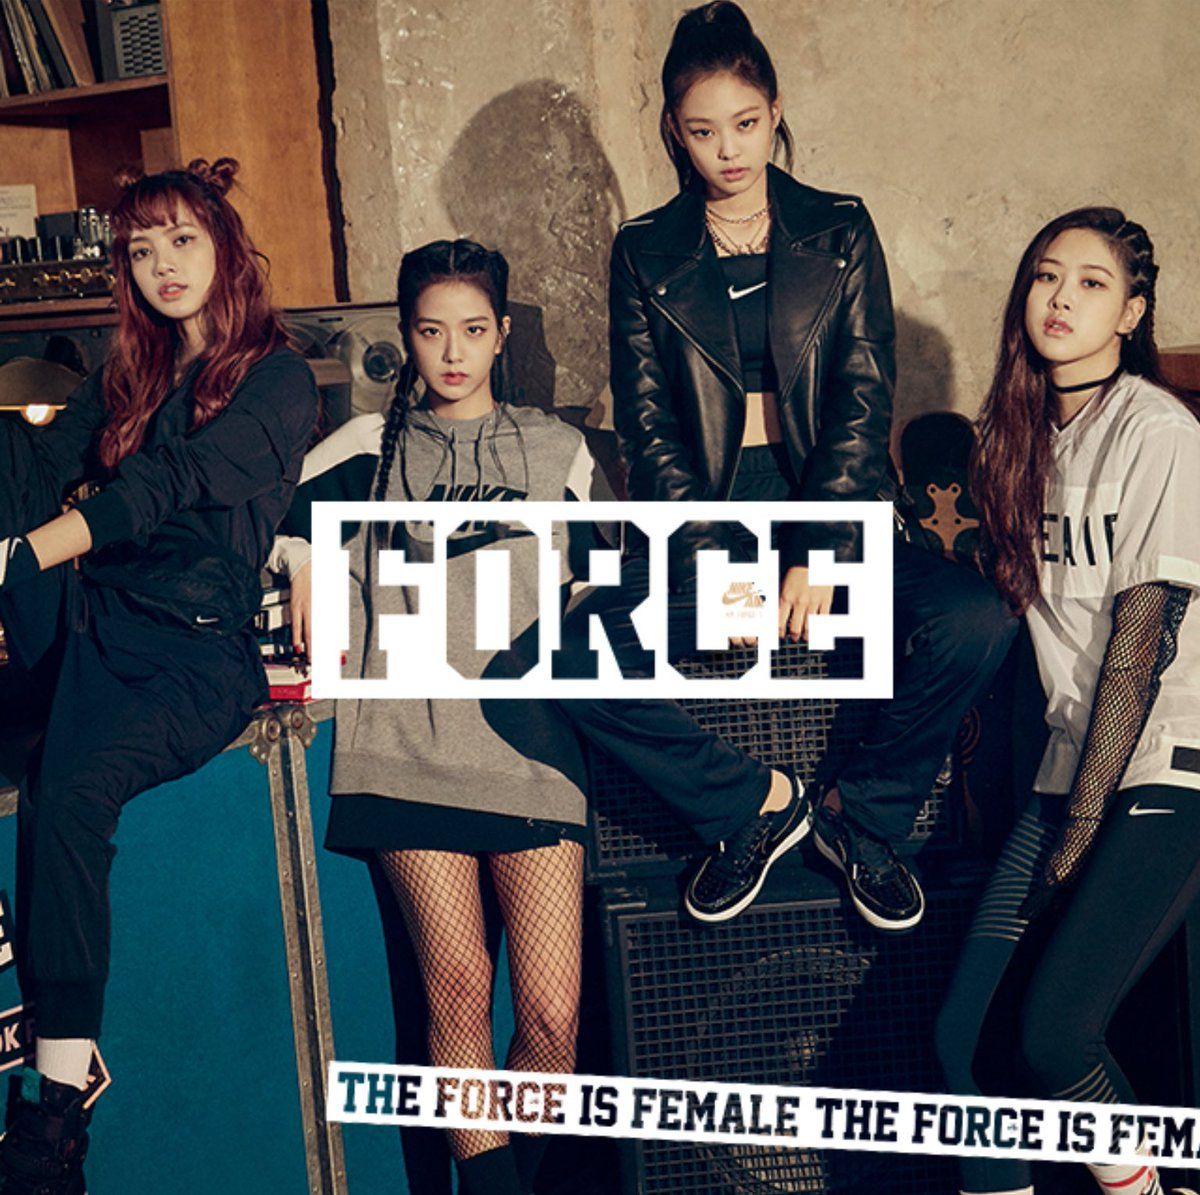 Rows of Korean Idols Who Become Sportswear Brand Models